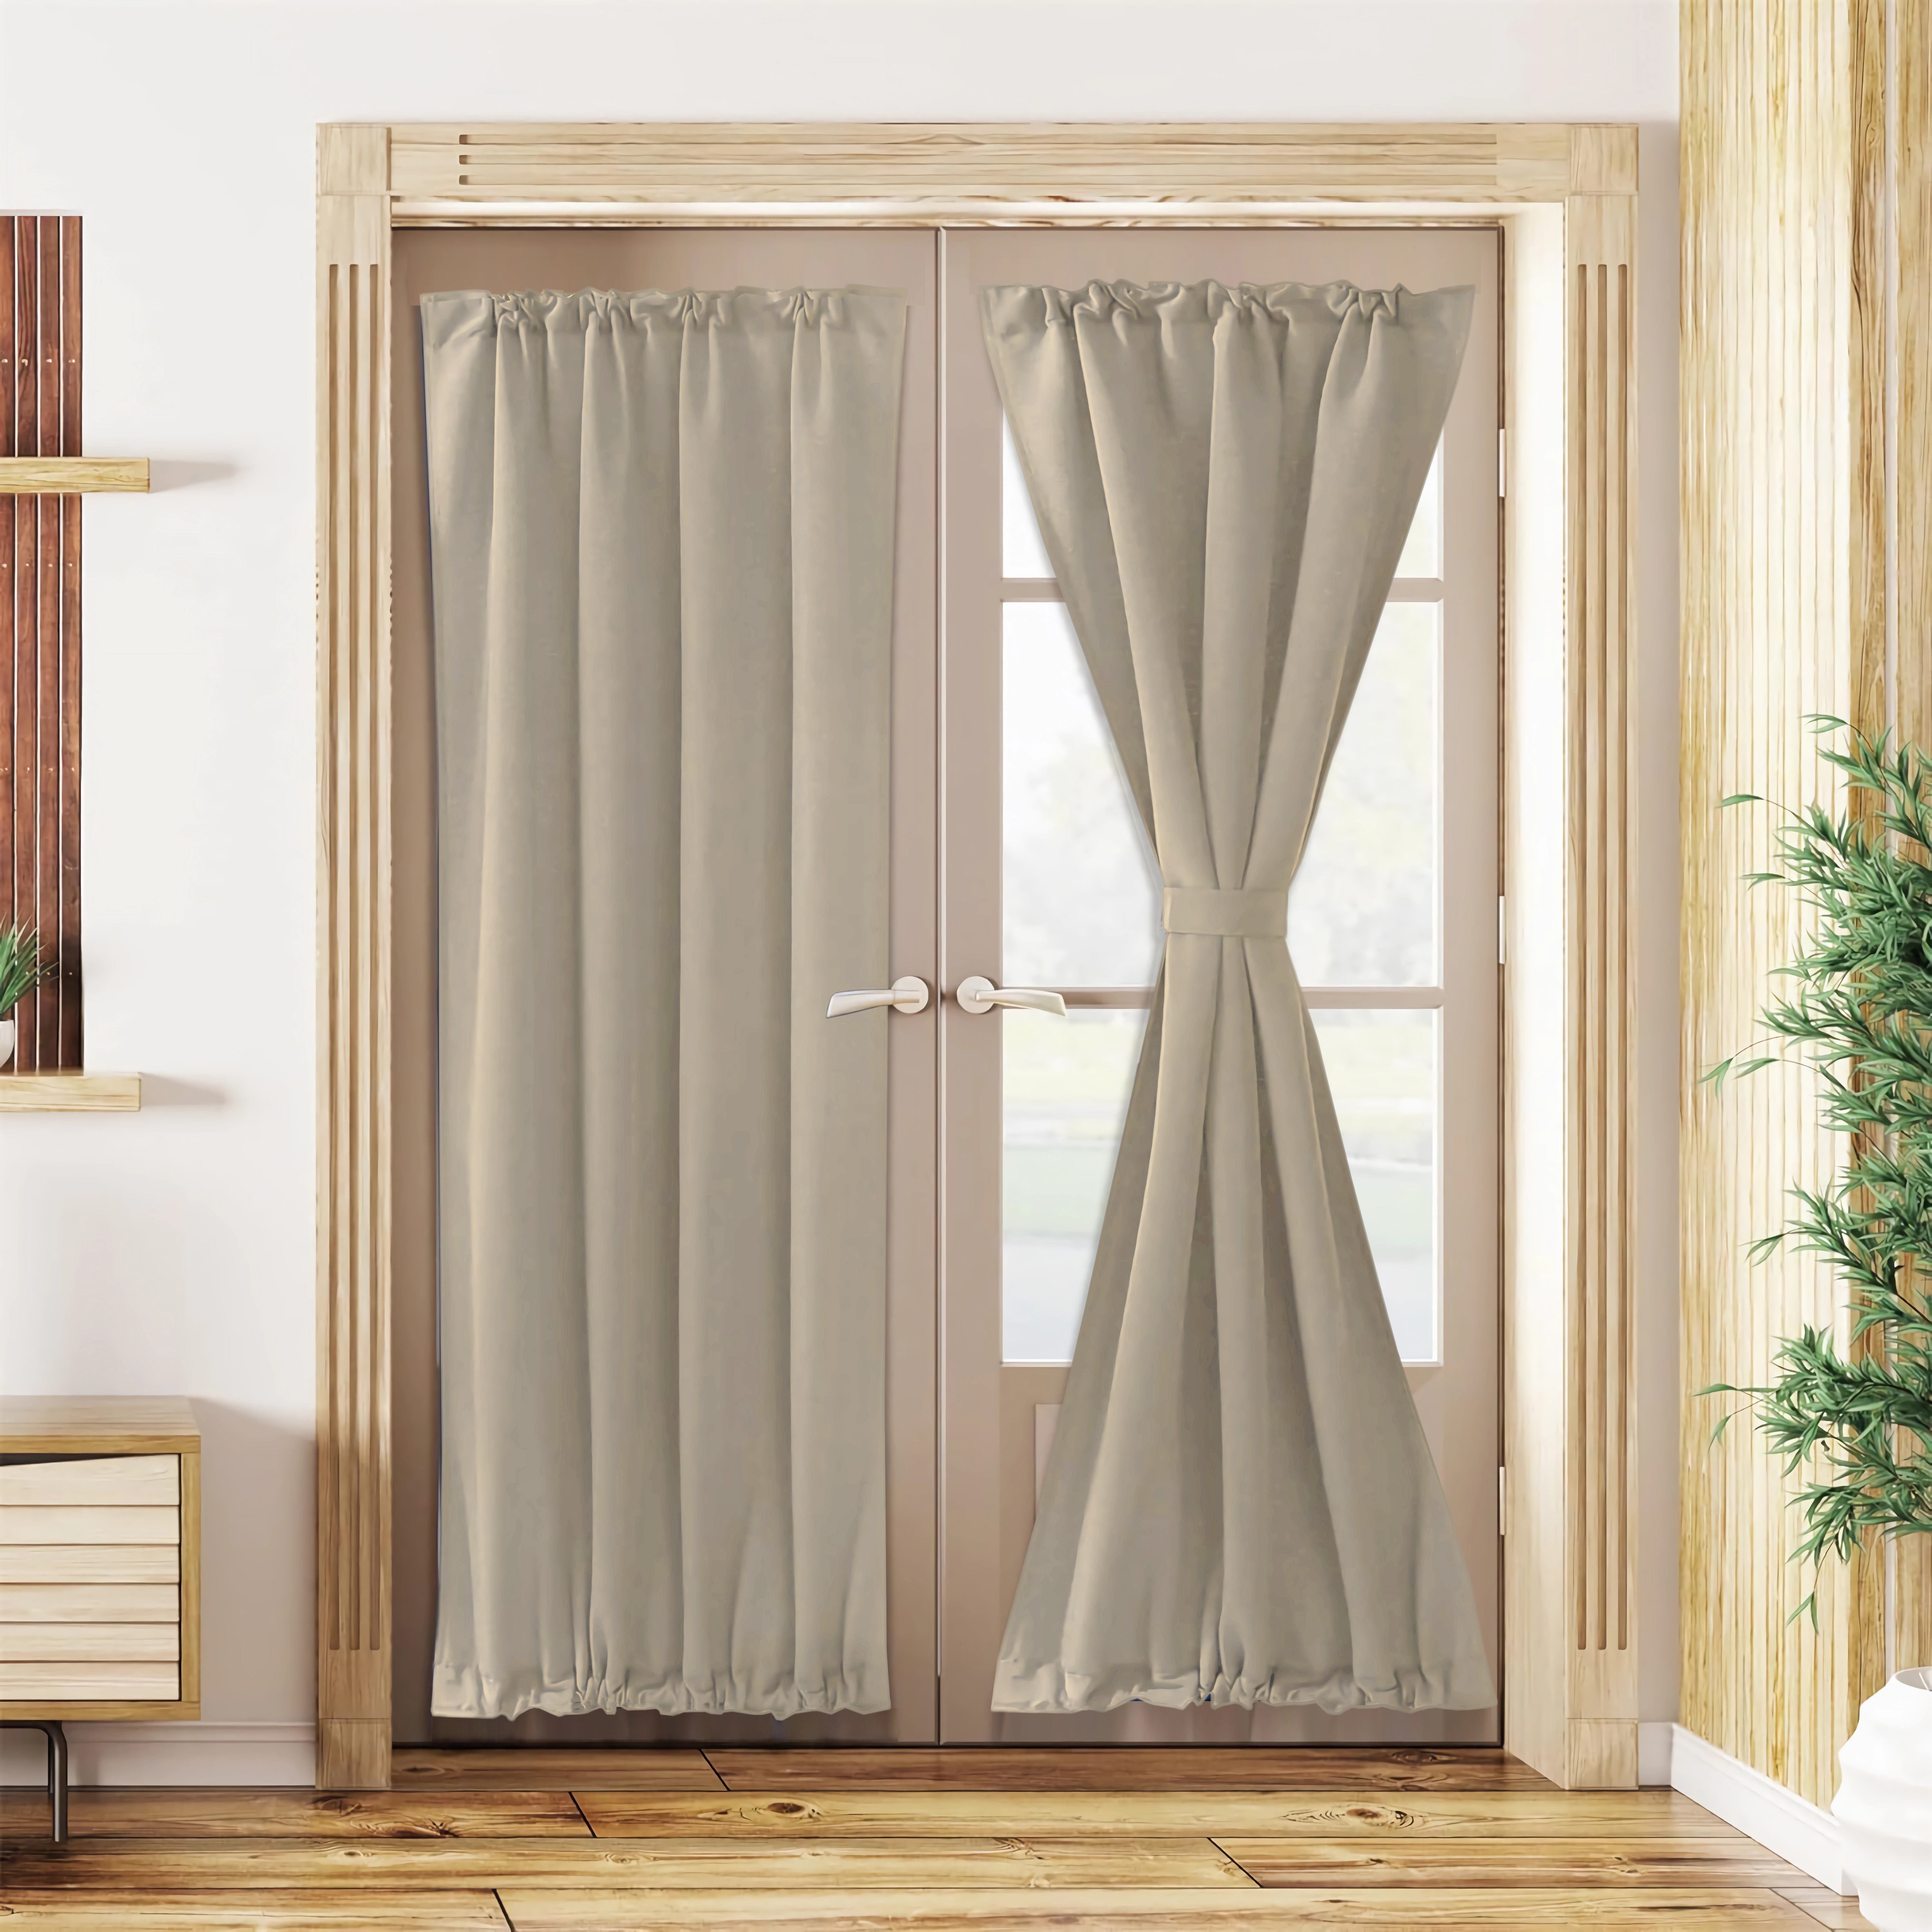 Cortinas opacas aisladas térmicamente, color beige, cortinas de ventana con  ganchos 2 paneles para sala de estar, dormitorio, decoración de ventana 2